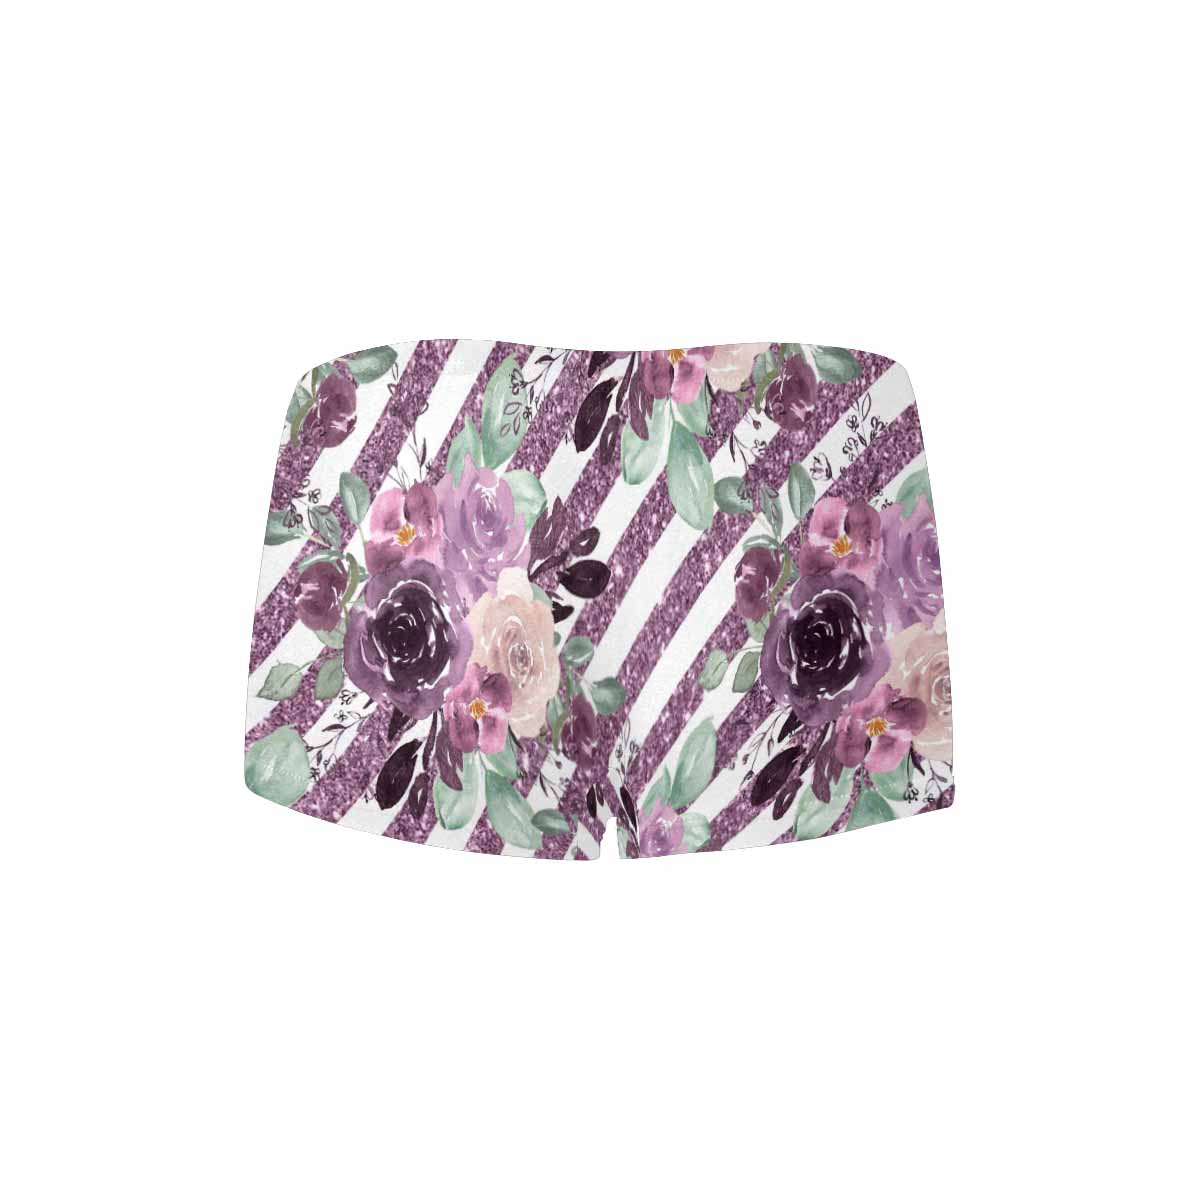 Floral 2, boyshorts, daisy dukes, pum pum shorts, panties, design 33